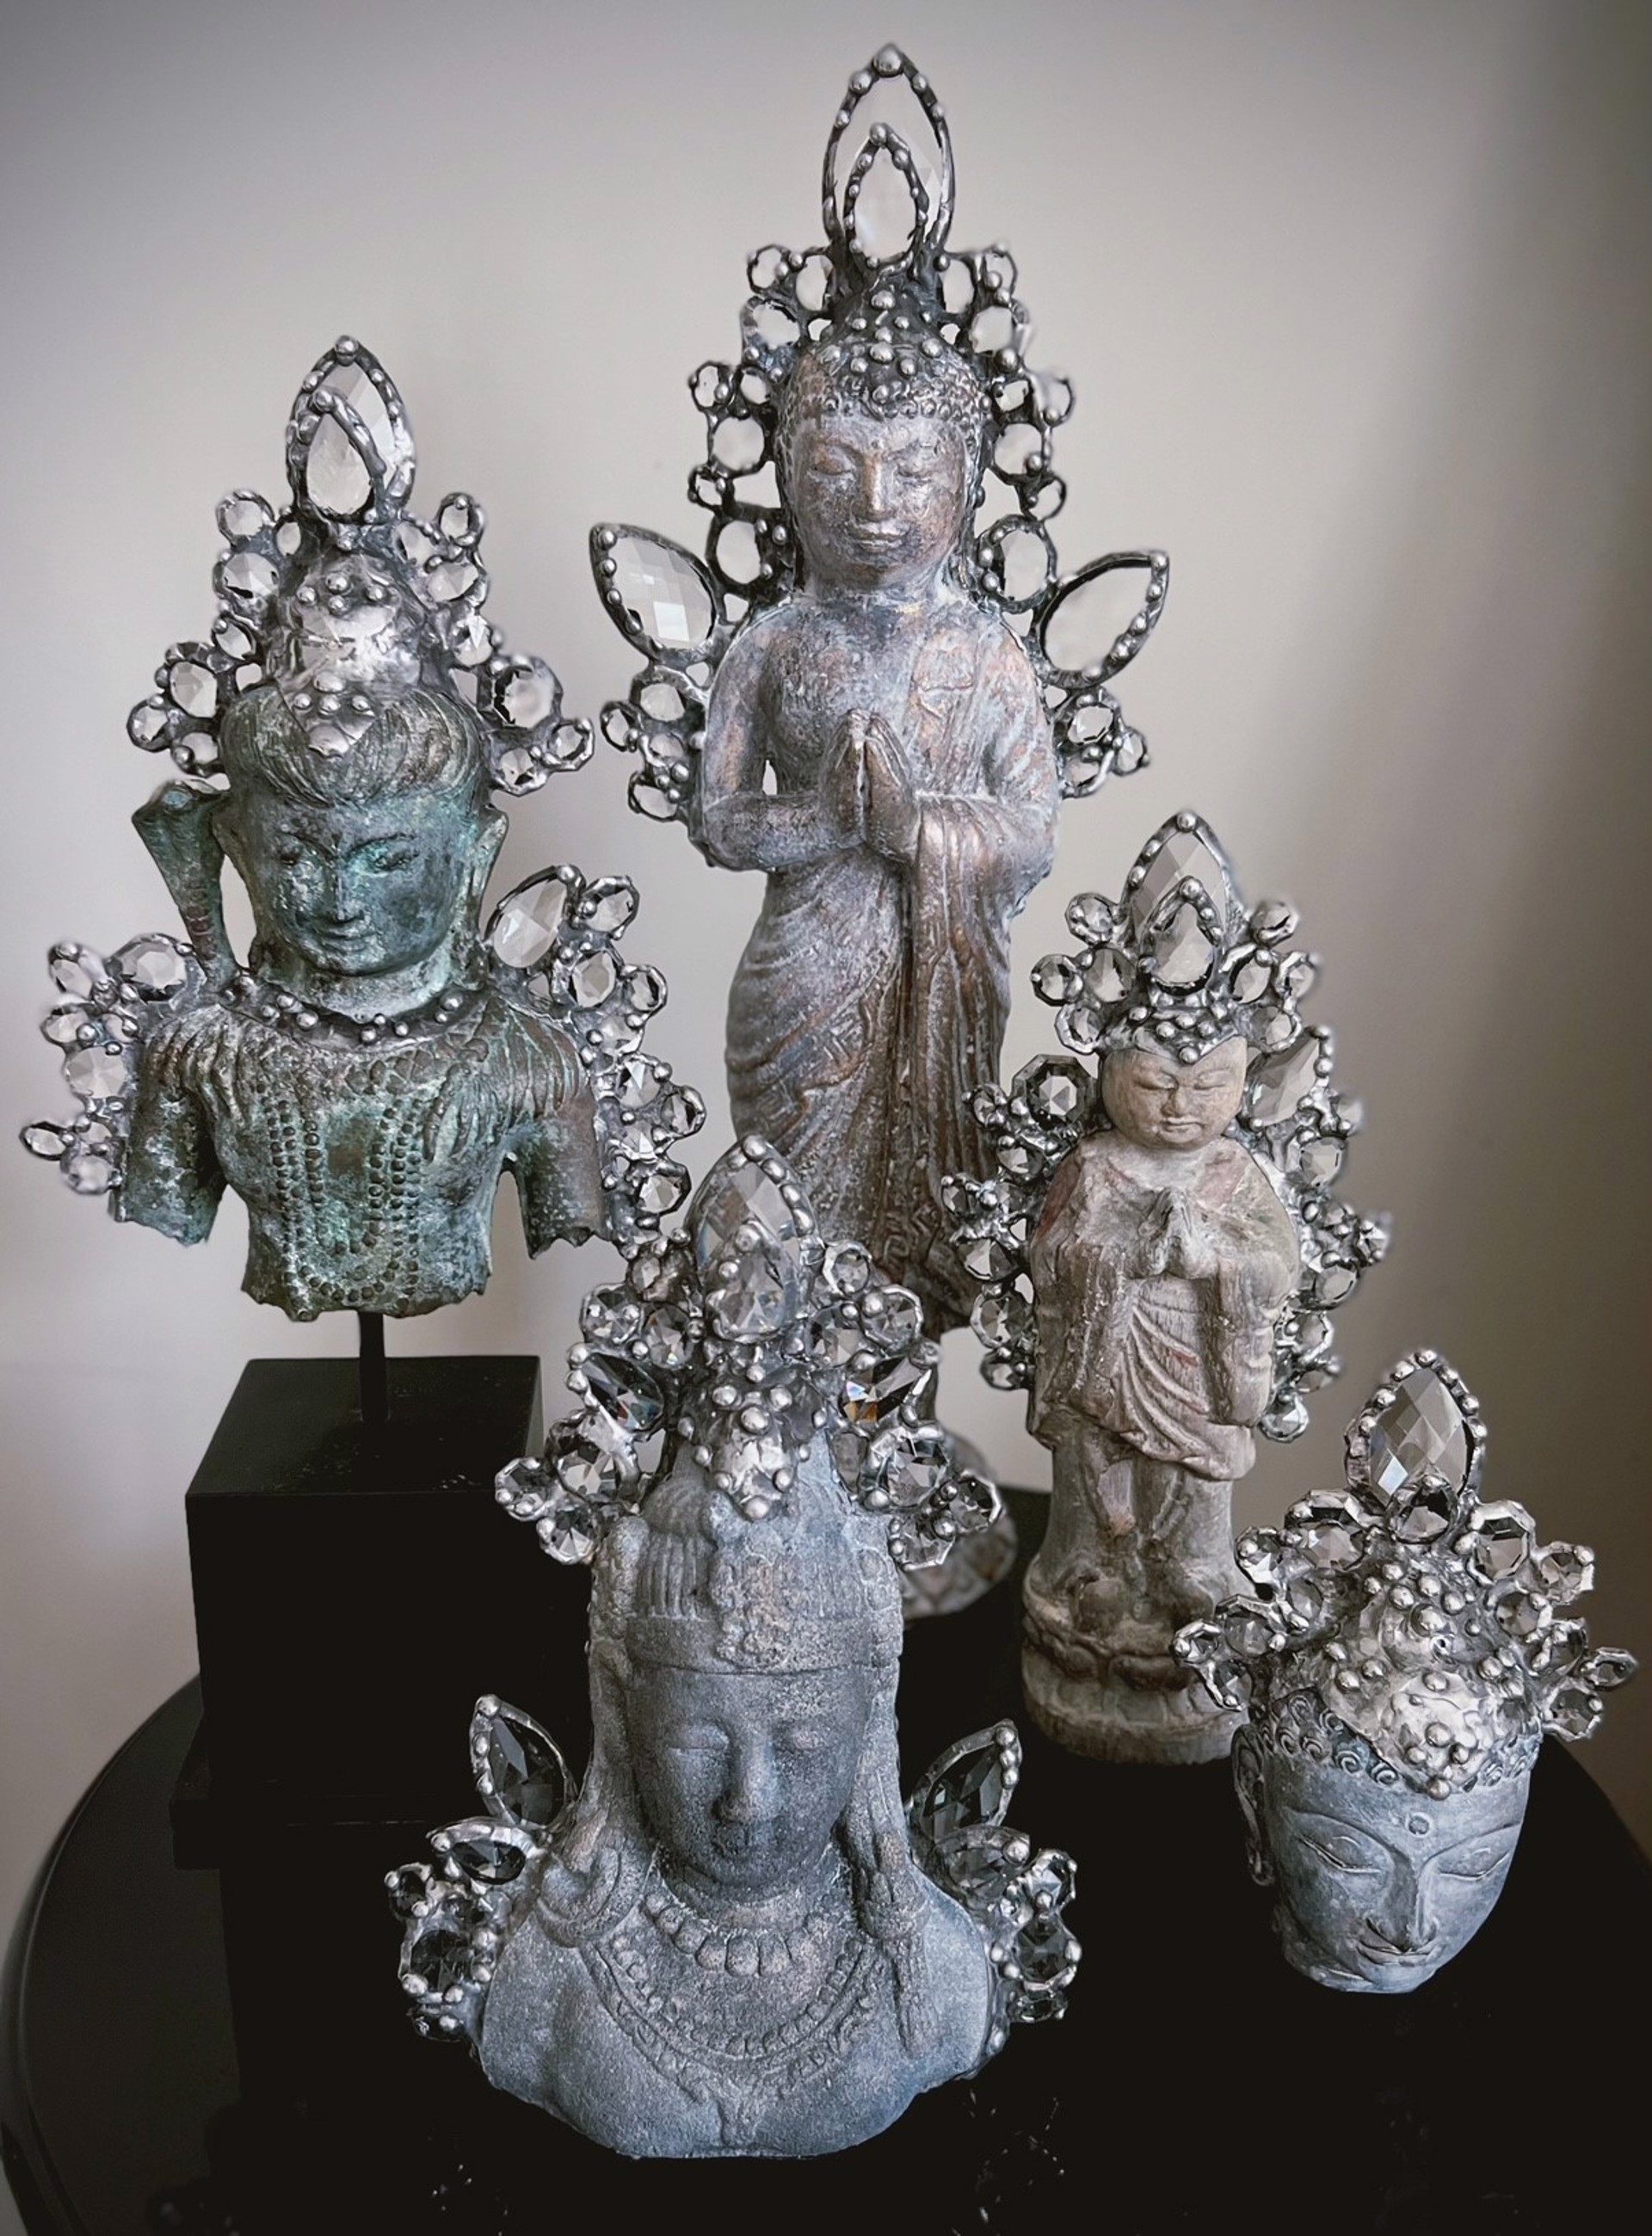 Shiva on Stand by Trinka 5 Designs